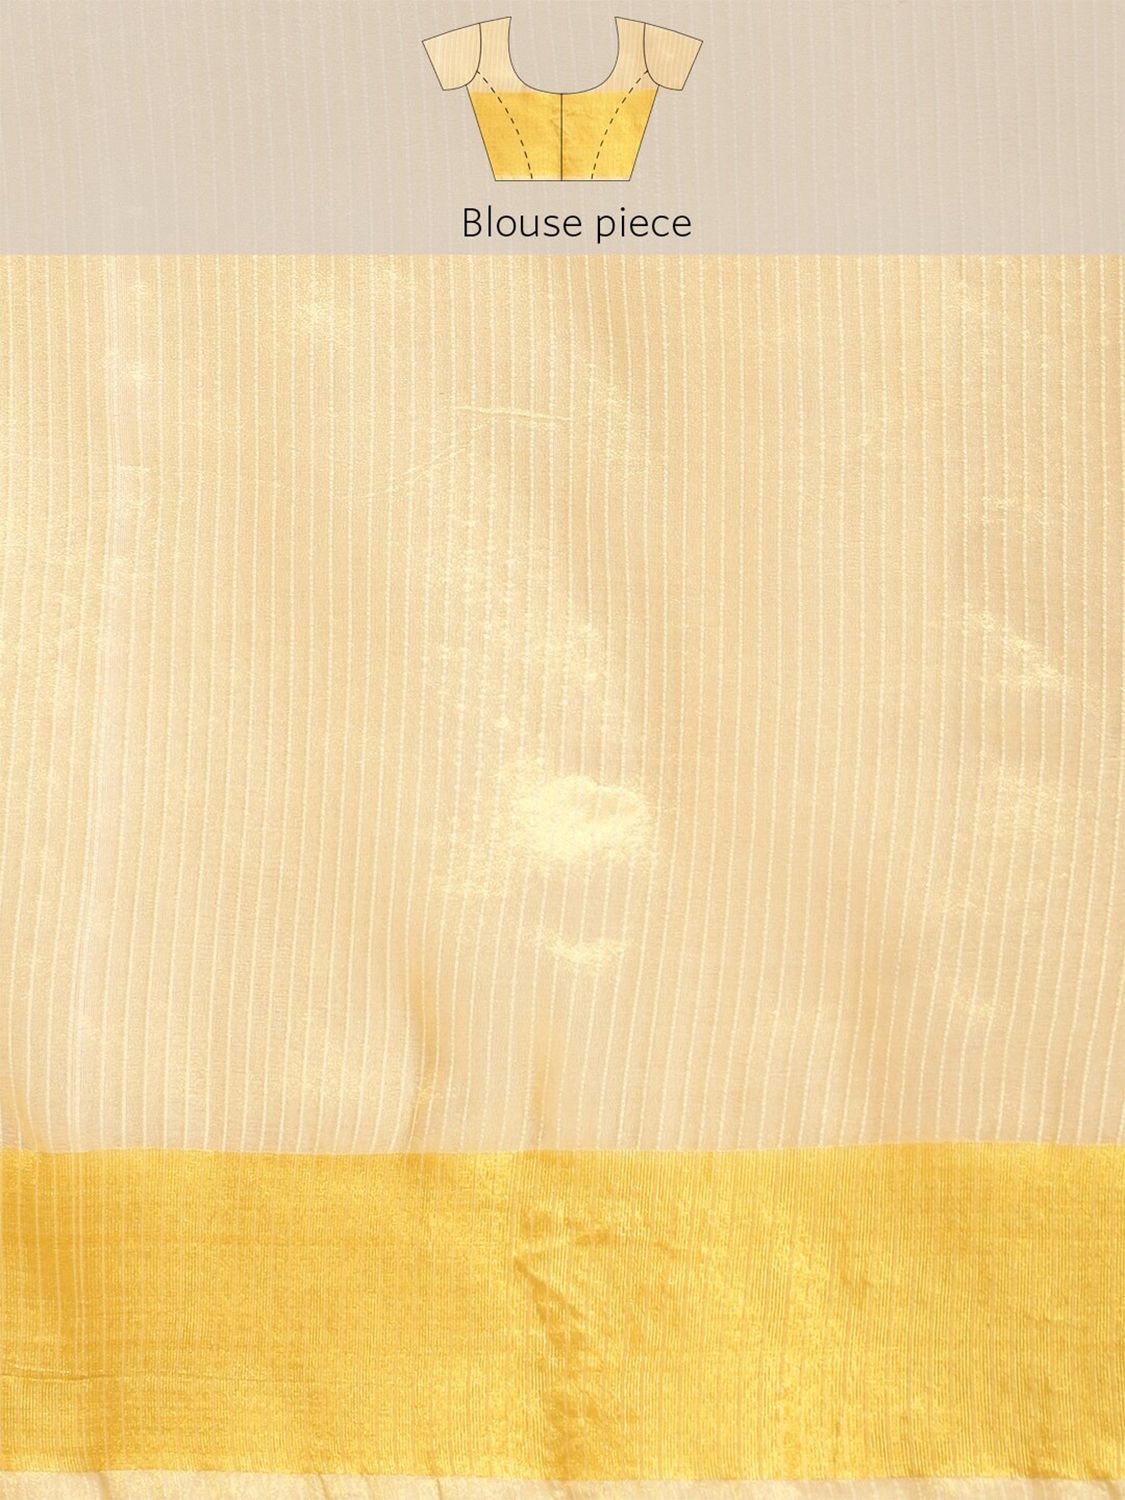 Leeza Store Cotton Blend Solid Plain Golden Zari Border Kerala Kasavu Saree With Blouse Piece - Beige